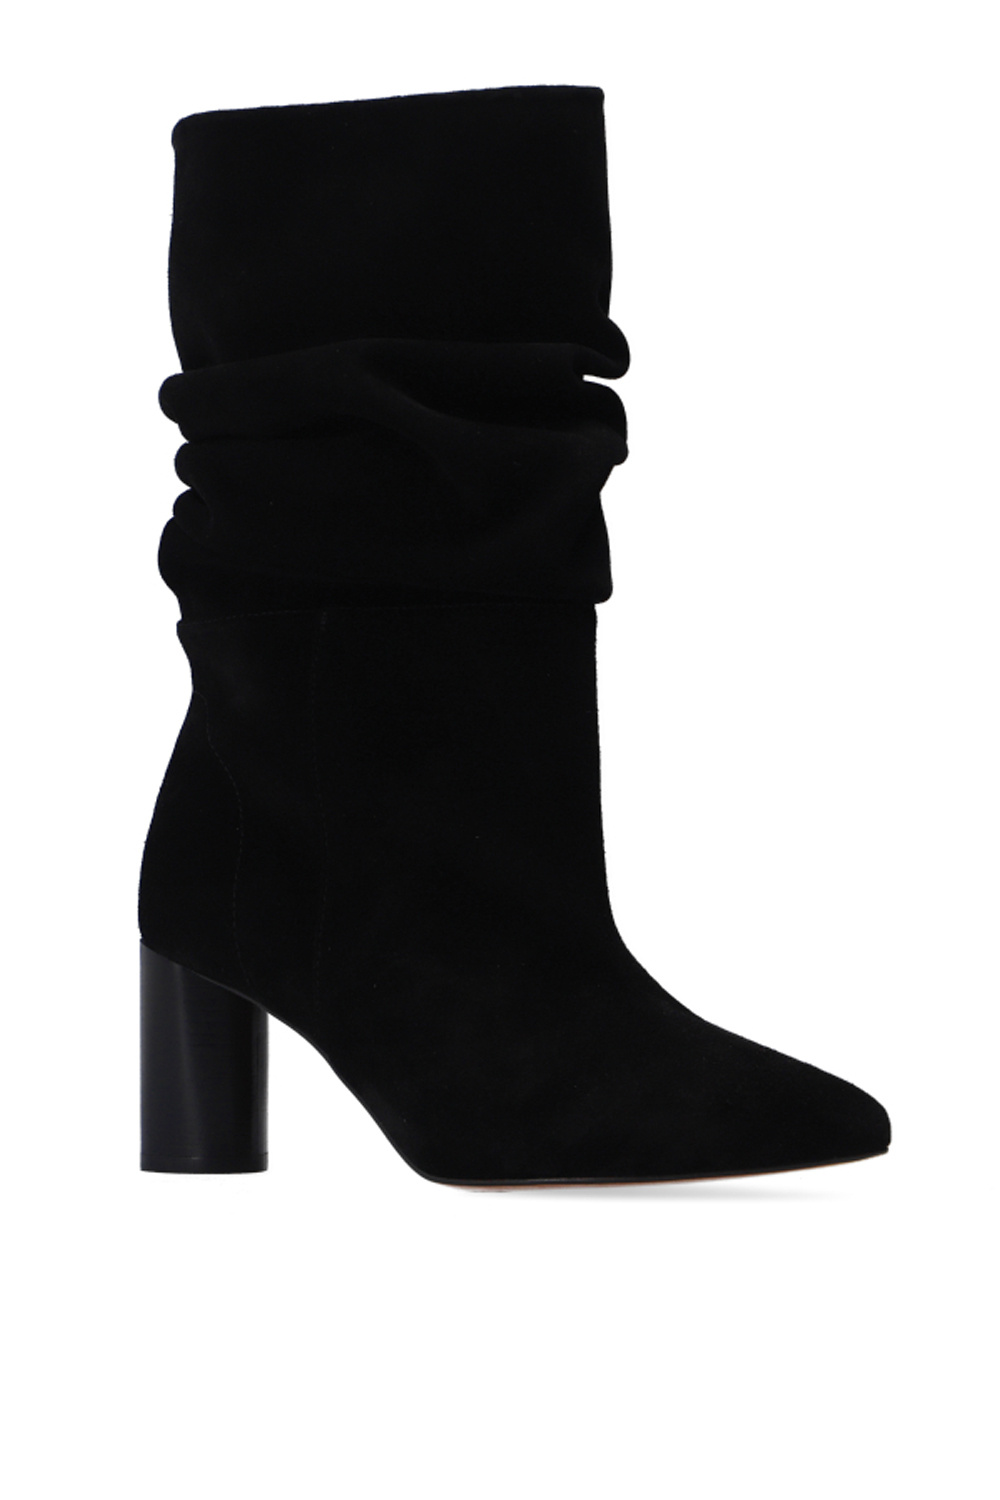 Iro 'Cynar' heeled ankle boots